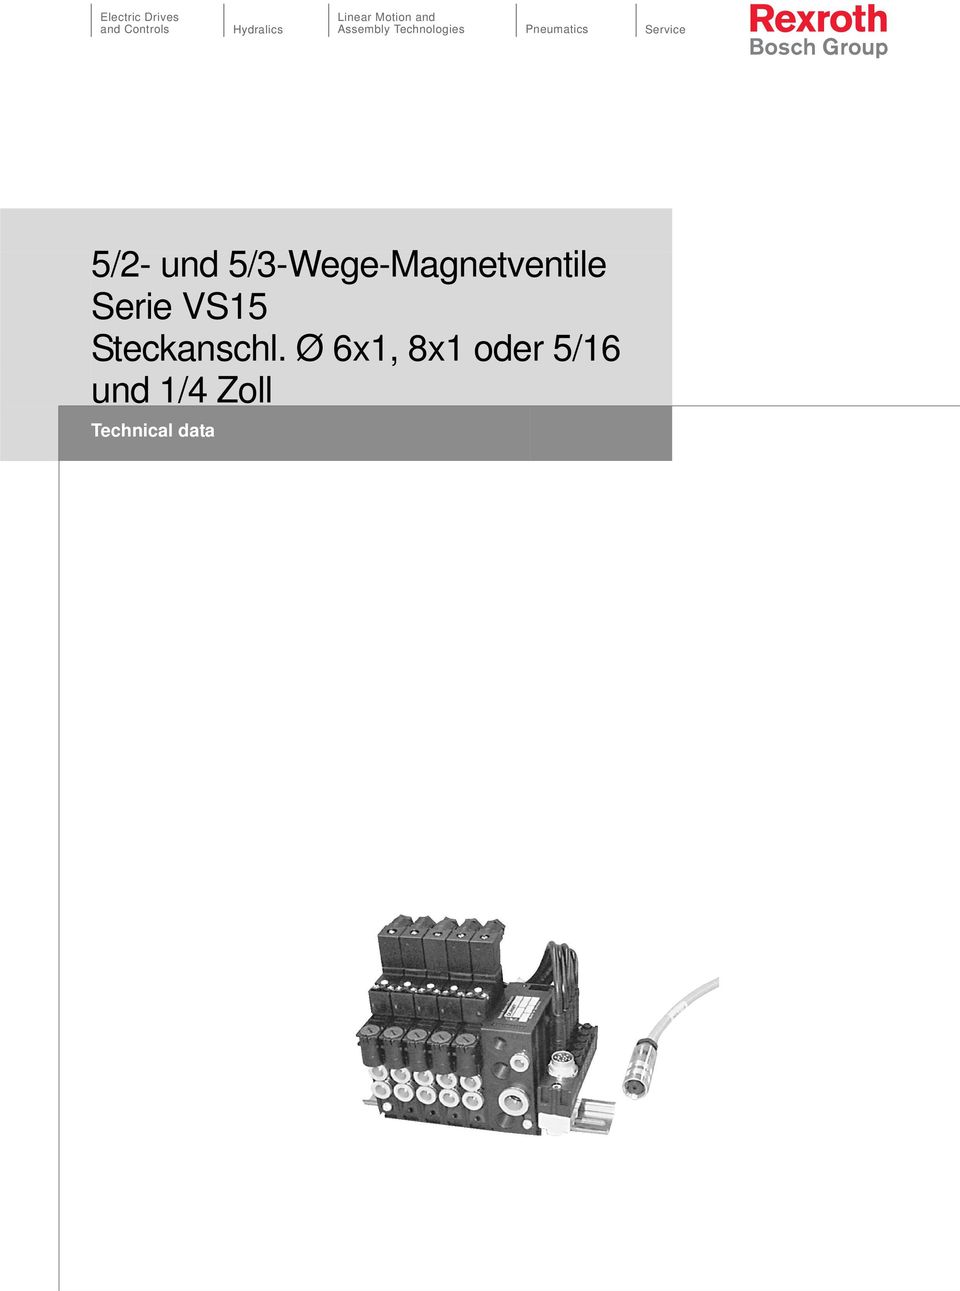 Service 5/2- und 5/3-Wege-Magnetventile Serie VS5